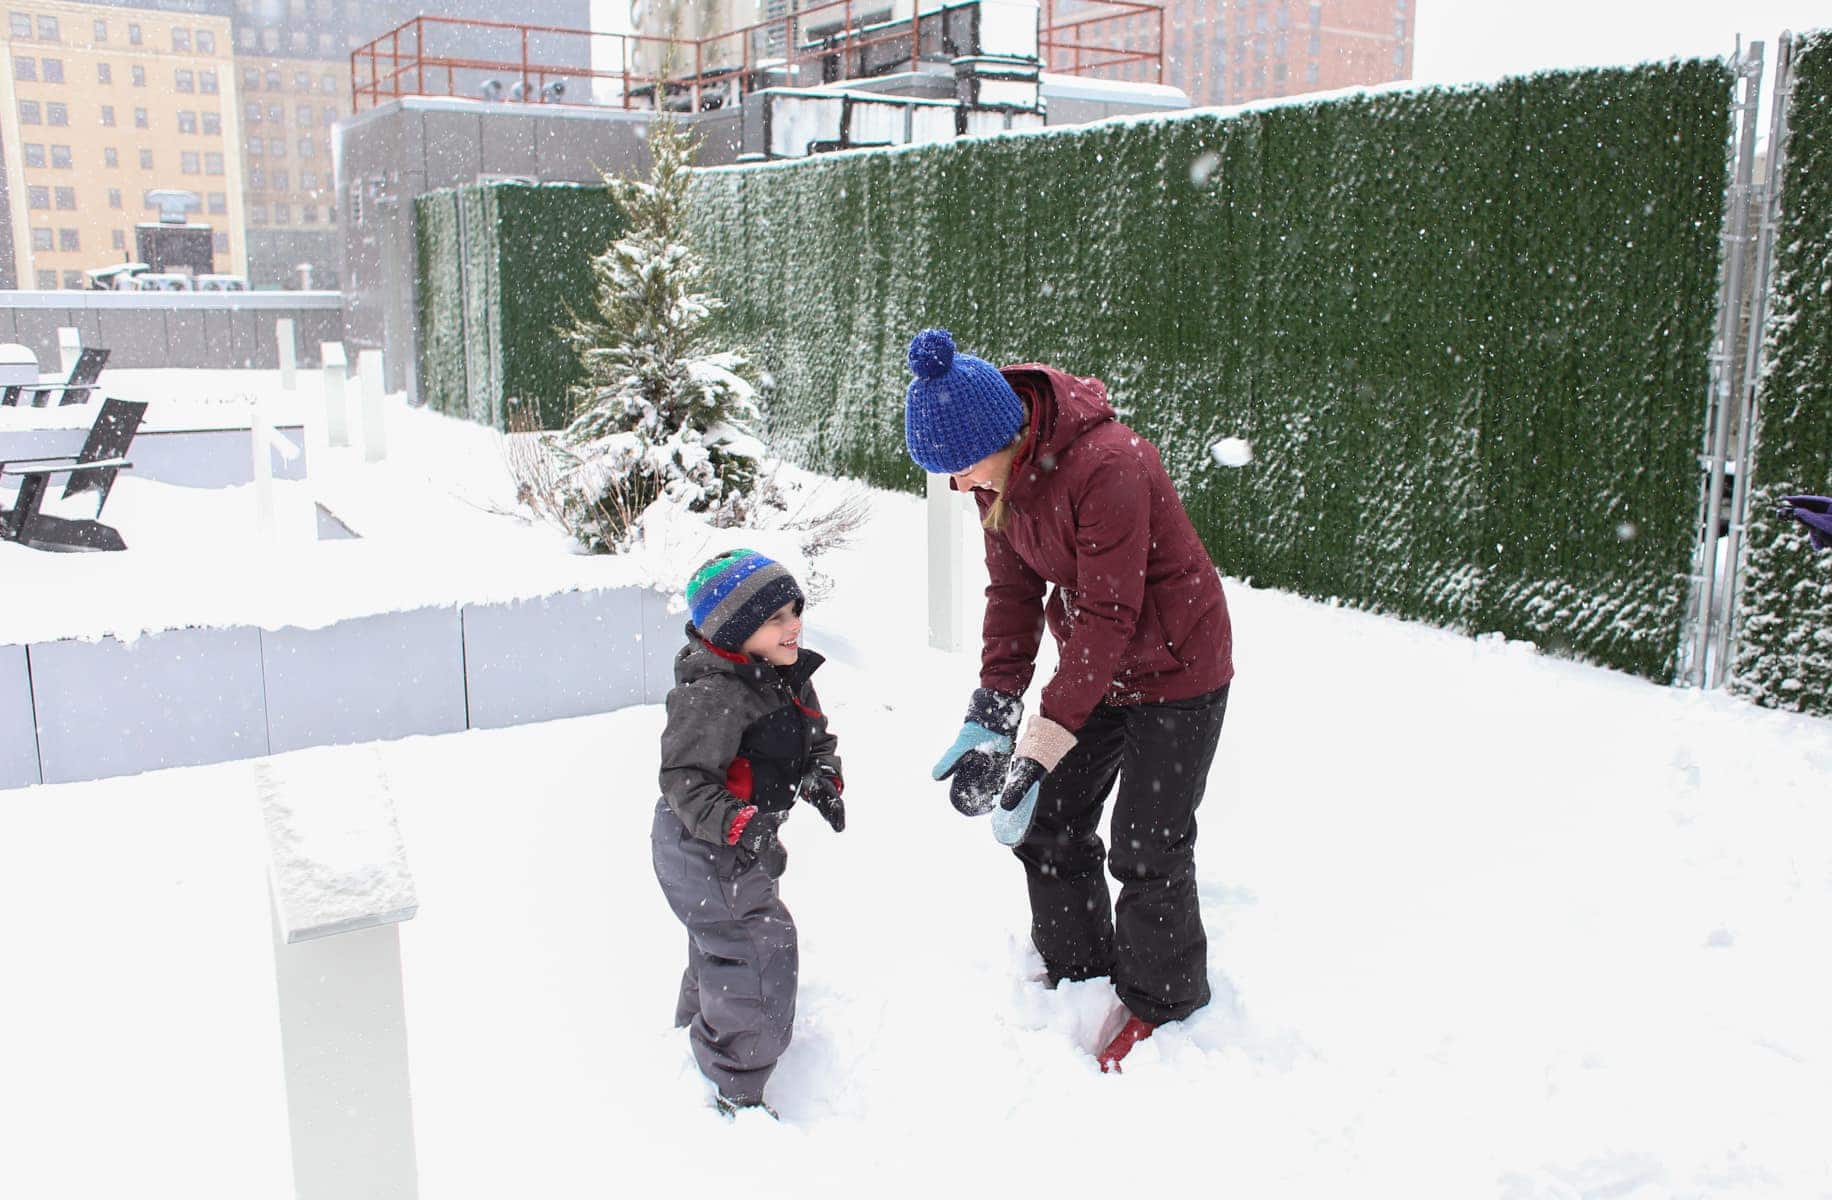 Lauren and Blake building a snowman